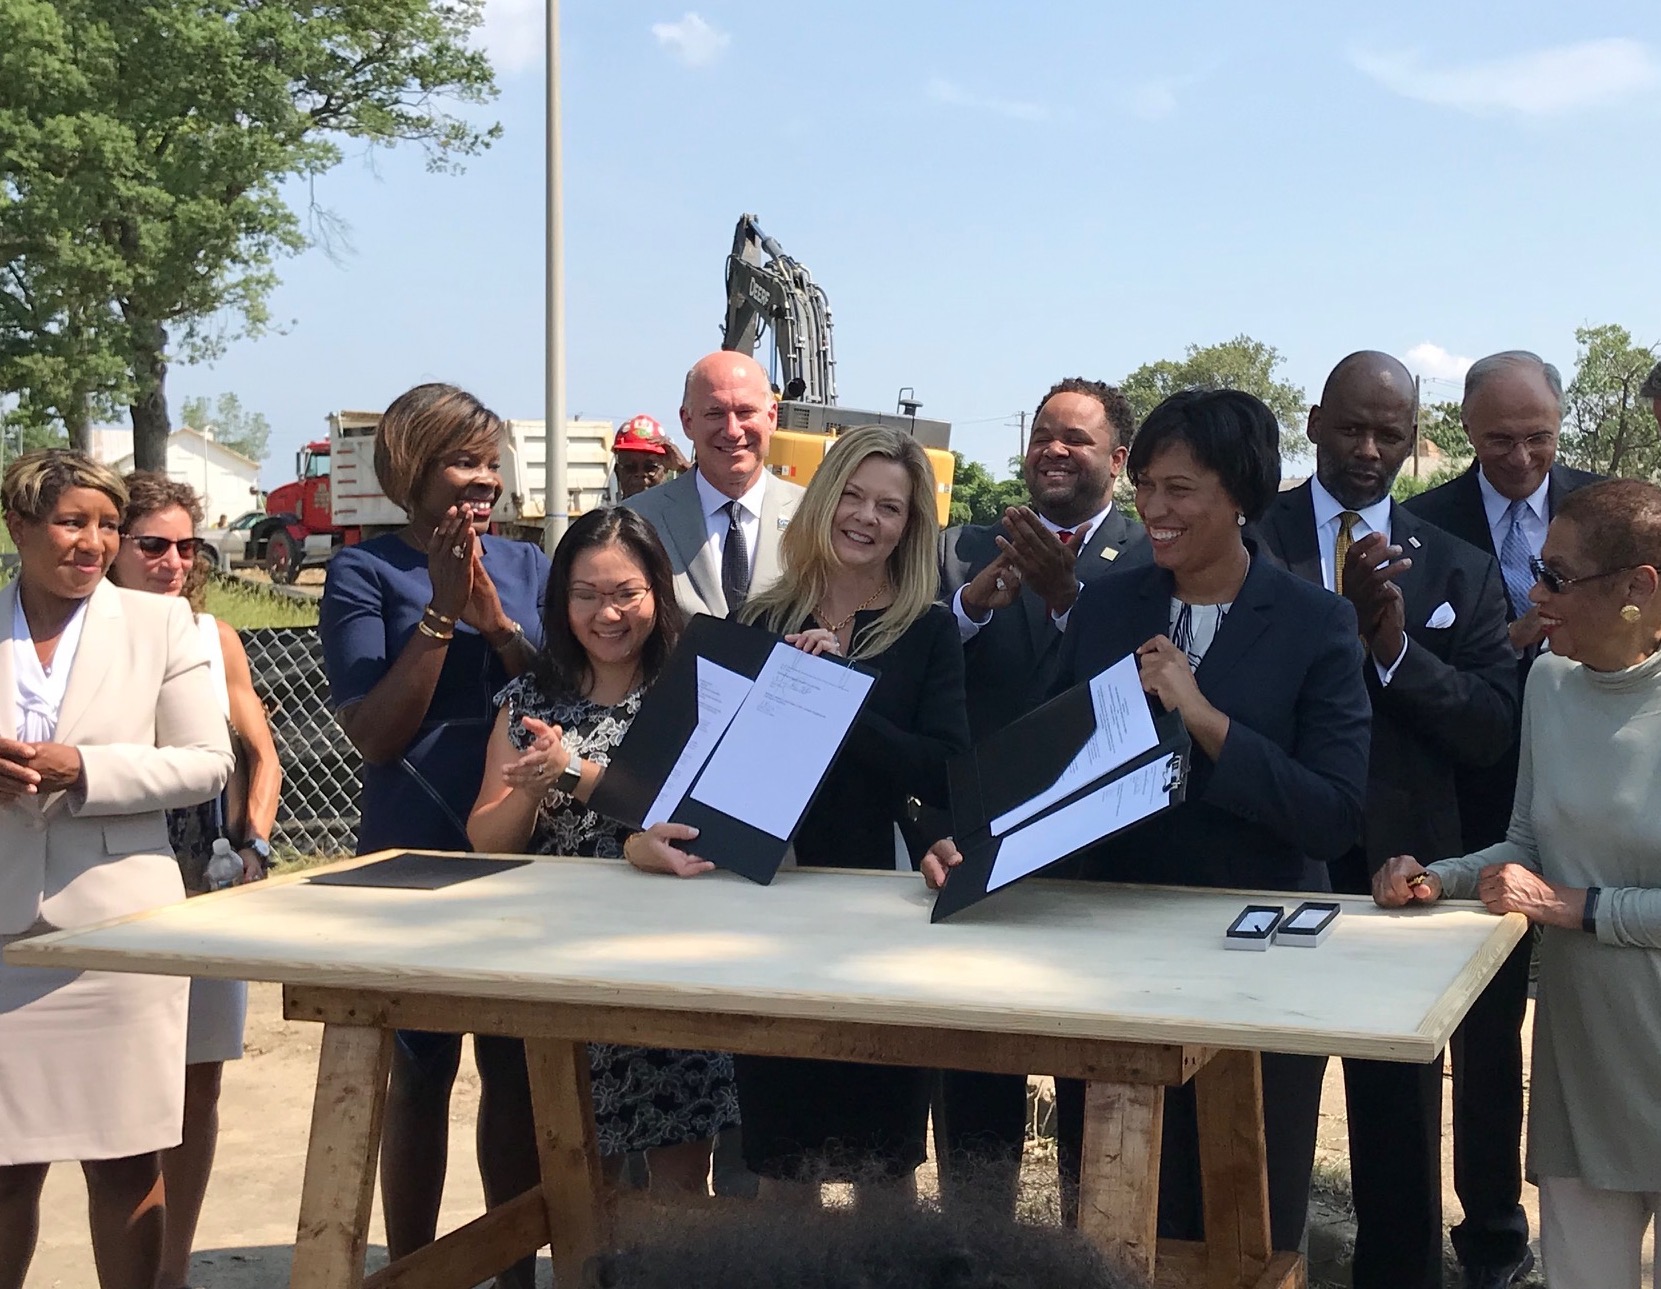 GW Hospital and Mayor Bowser announce partnership to build new hospital